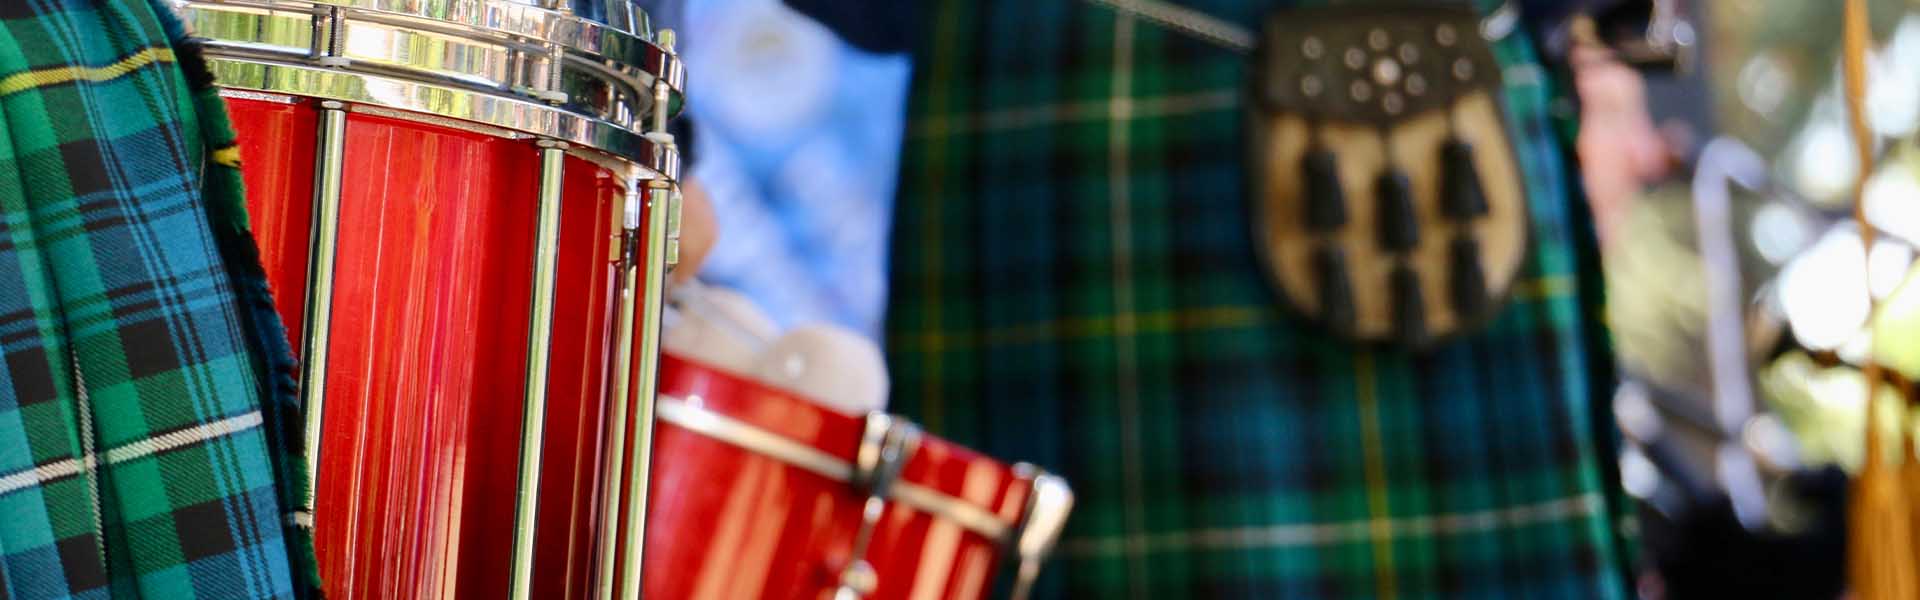 Scottish tartan and drums.